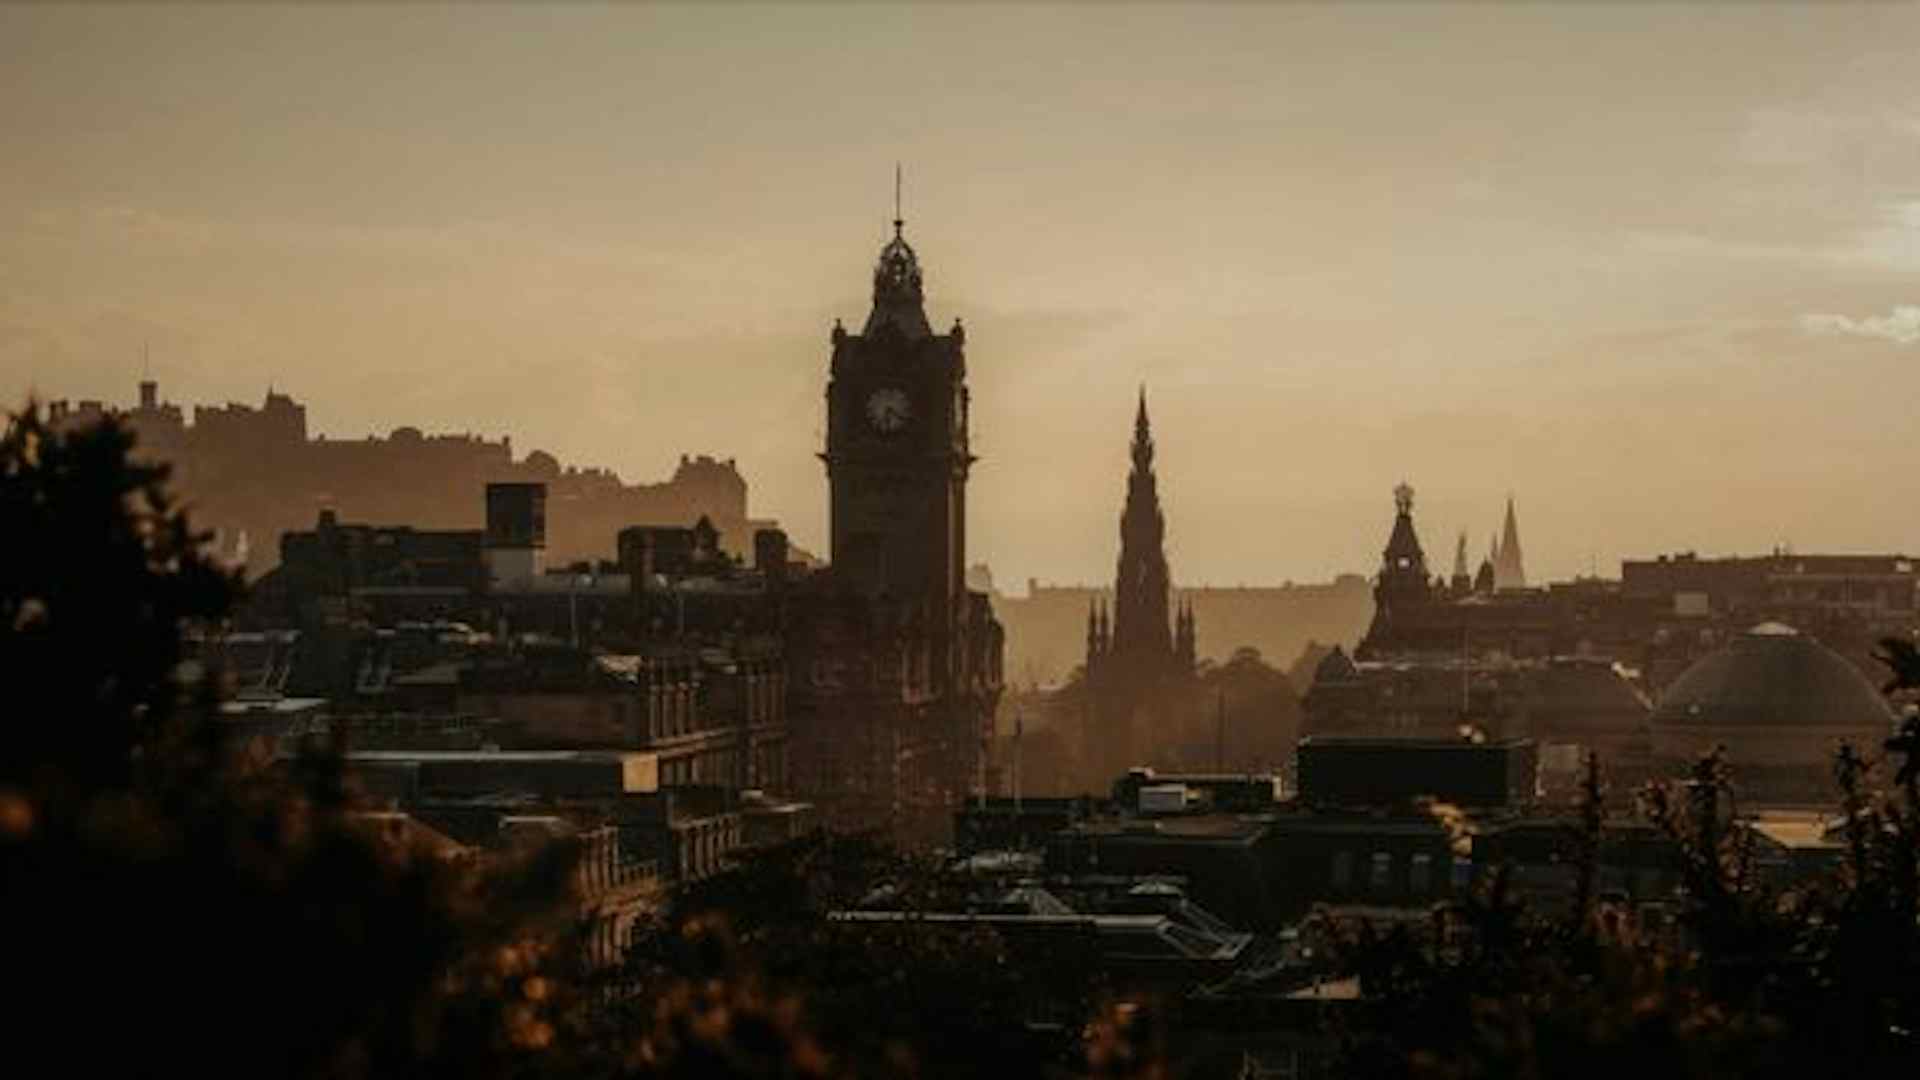 UK Destination of the Month: Edinburgh